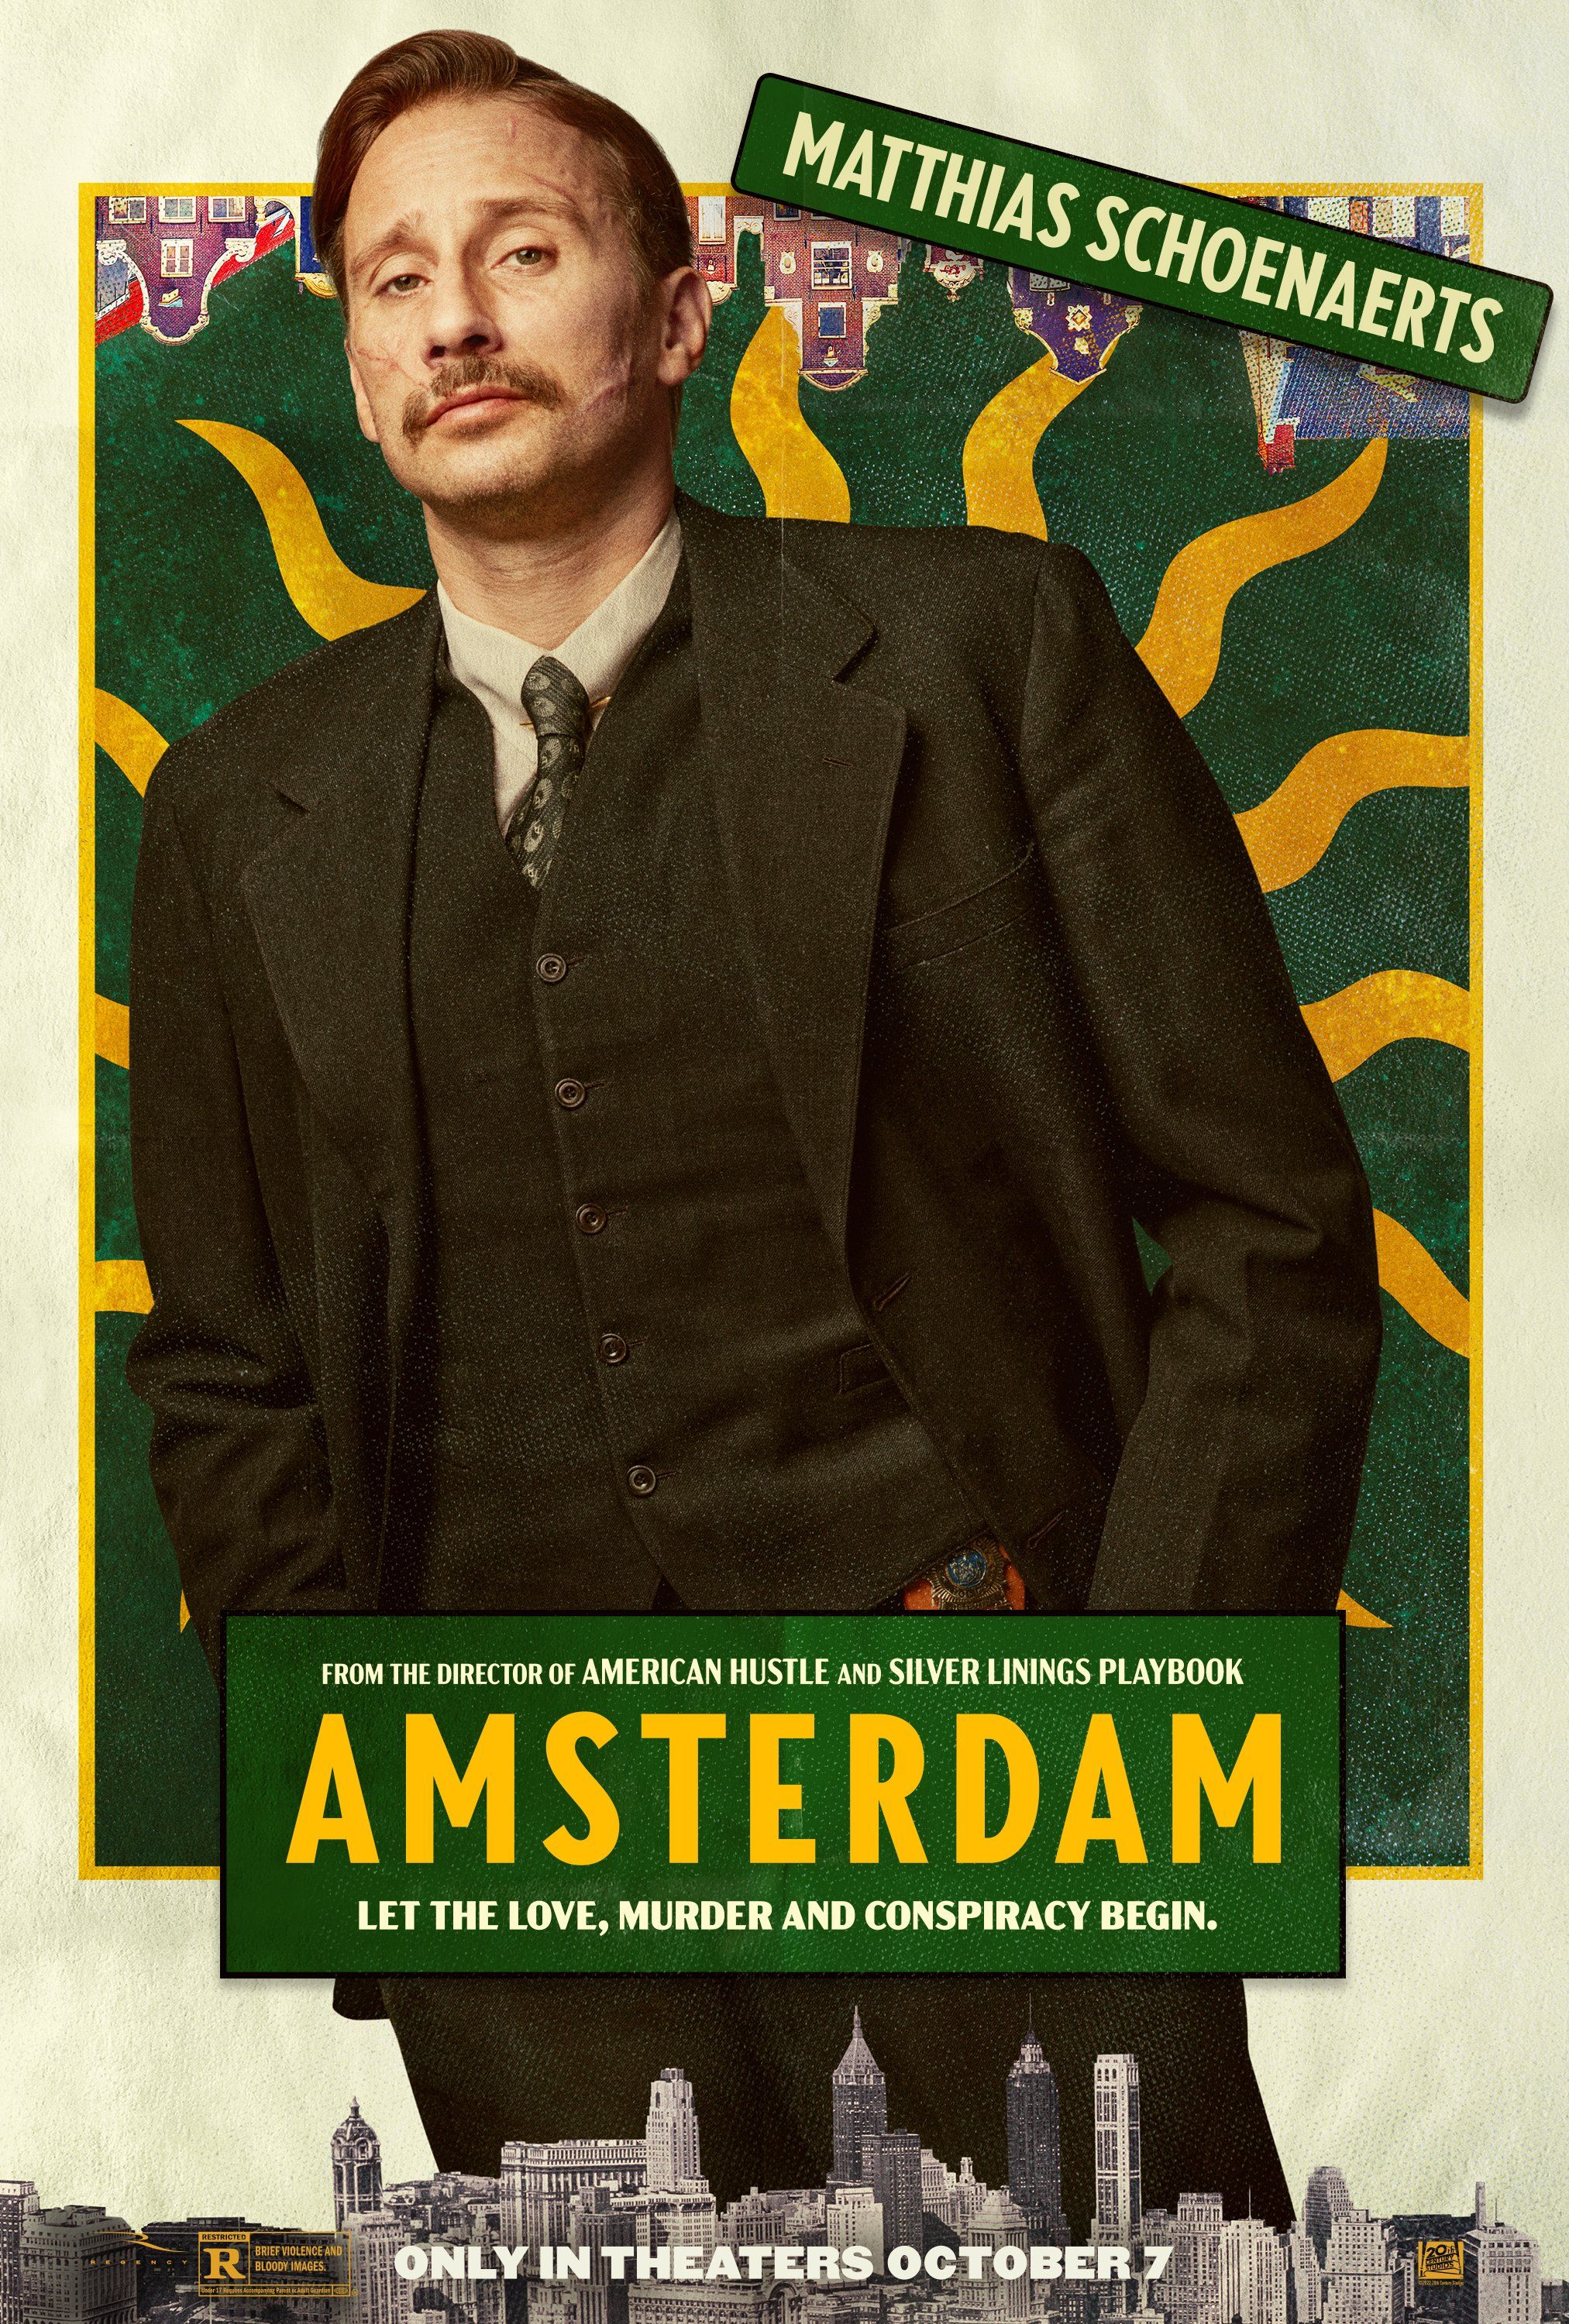 Matthias Schoenarts in Amsterdam poster